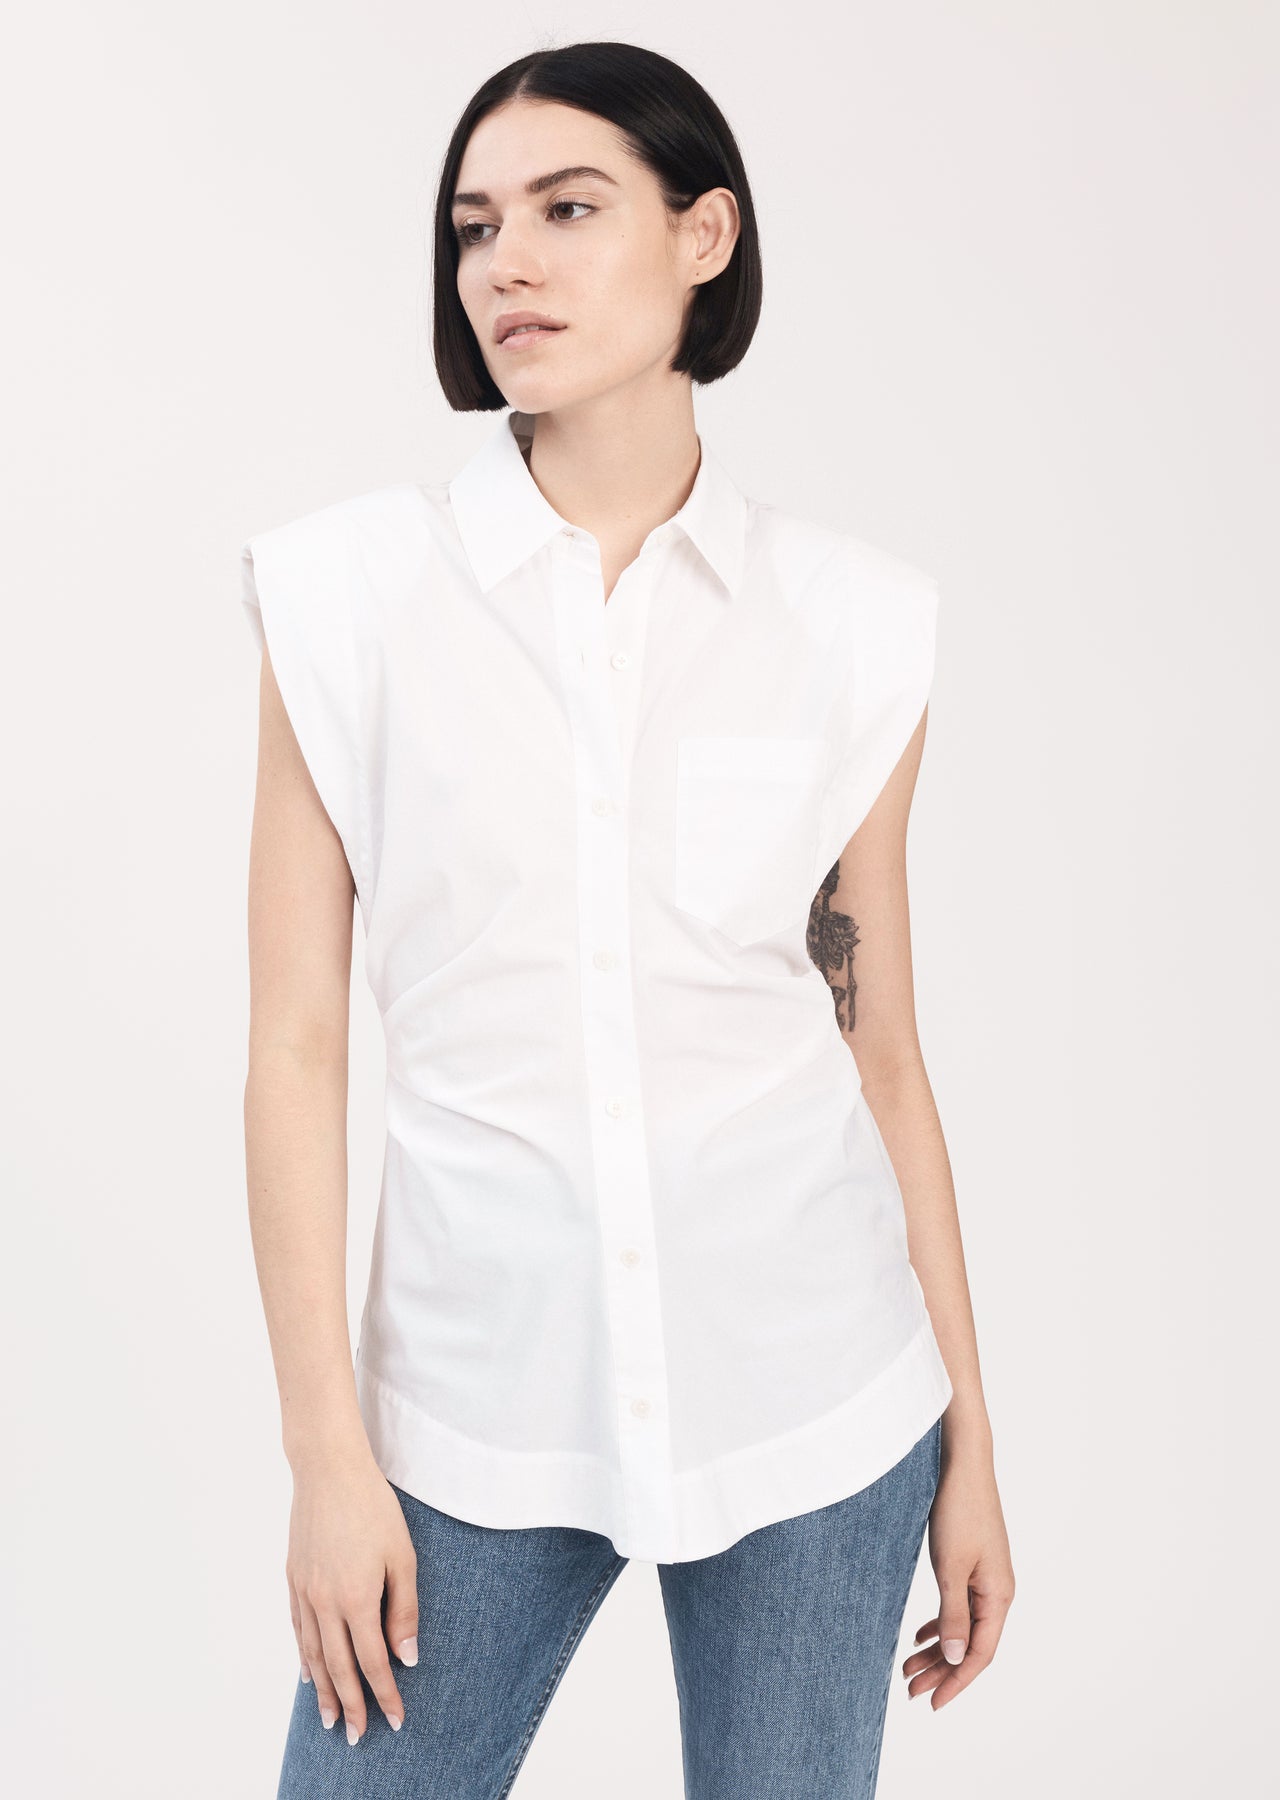 Women's Shirts, Blouses & Tops | Derek Lam 10 Crosby